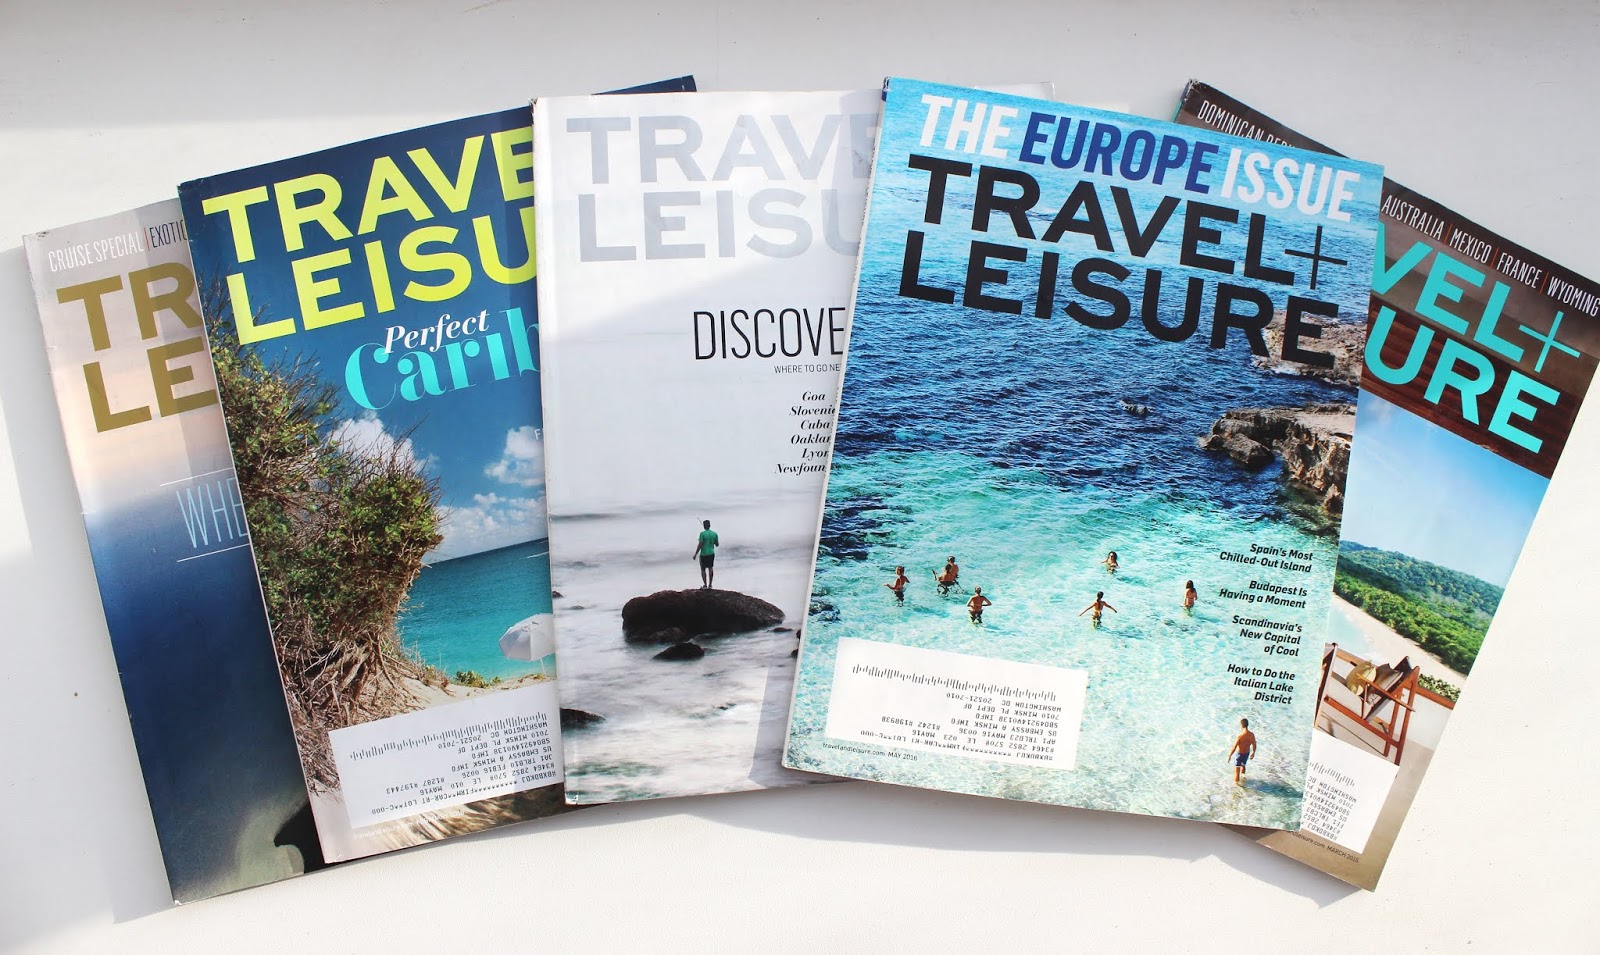 Travel magazines. Travel журналы. Журнала Travel+Leisure. Журнал о путешествиях. Журнал о путешествиях по России.